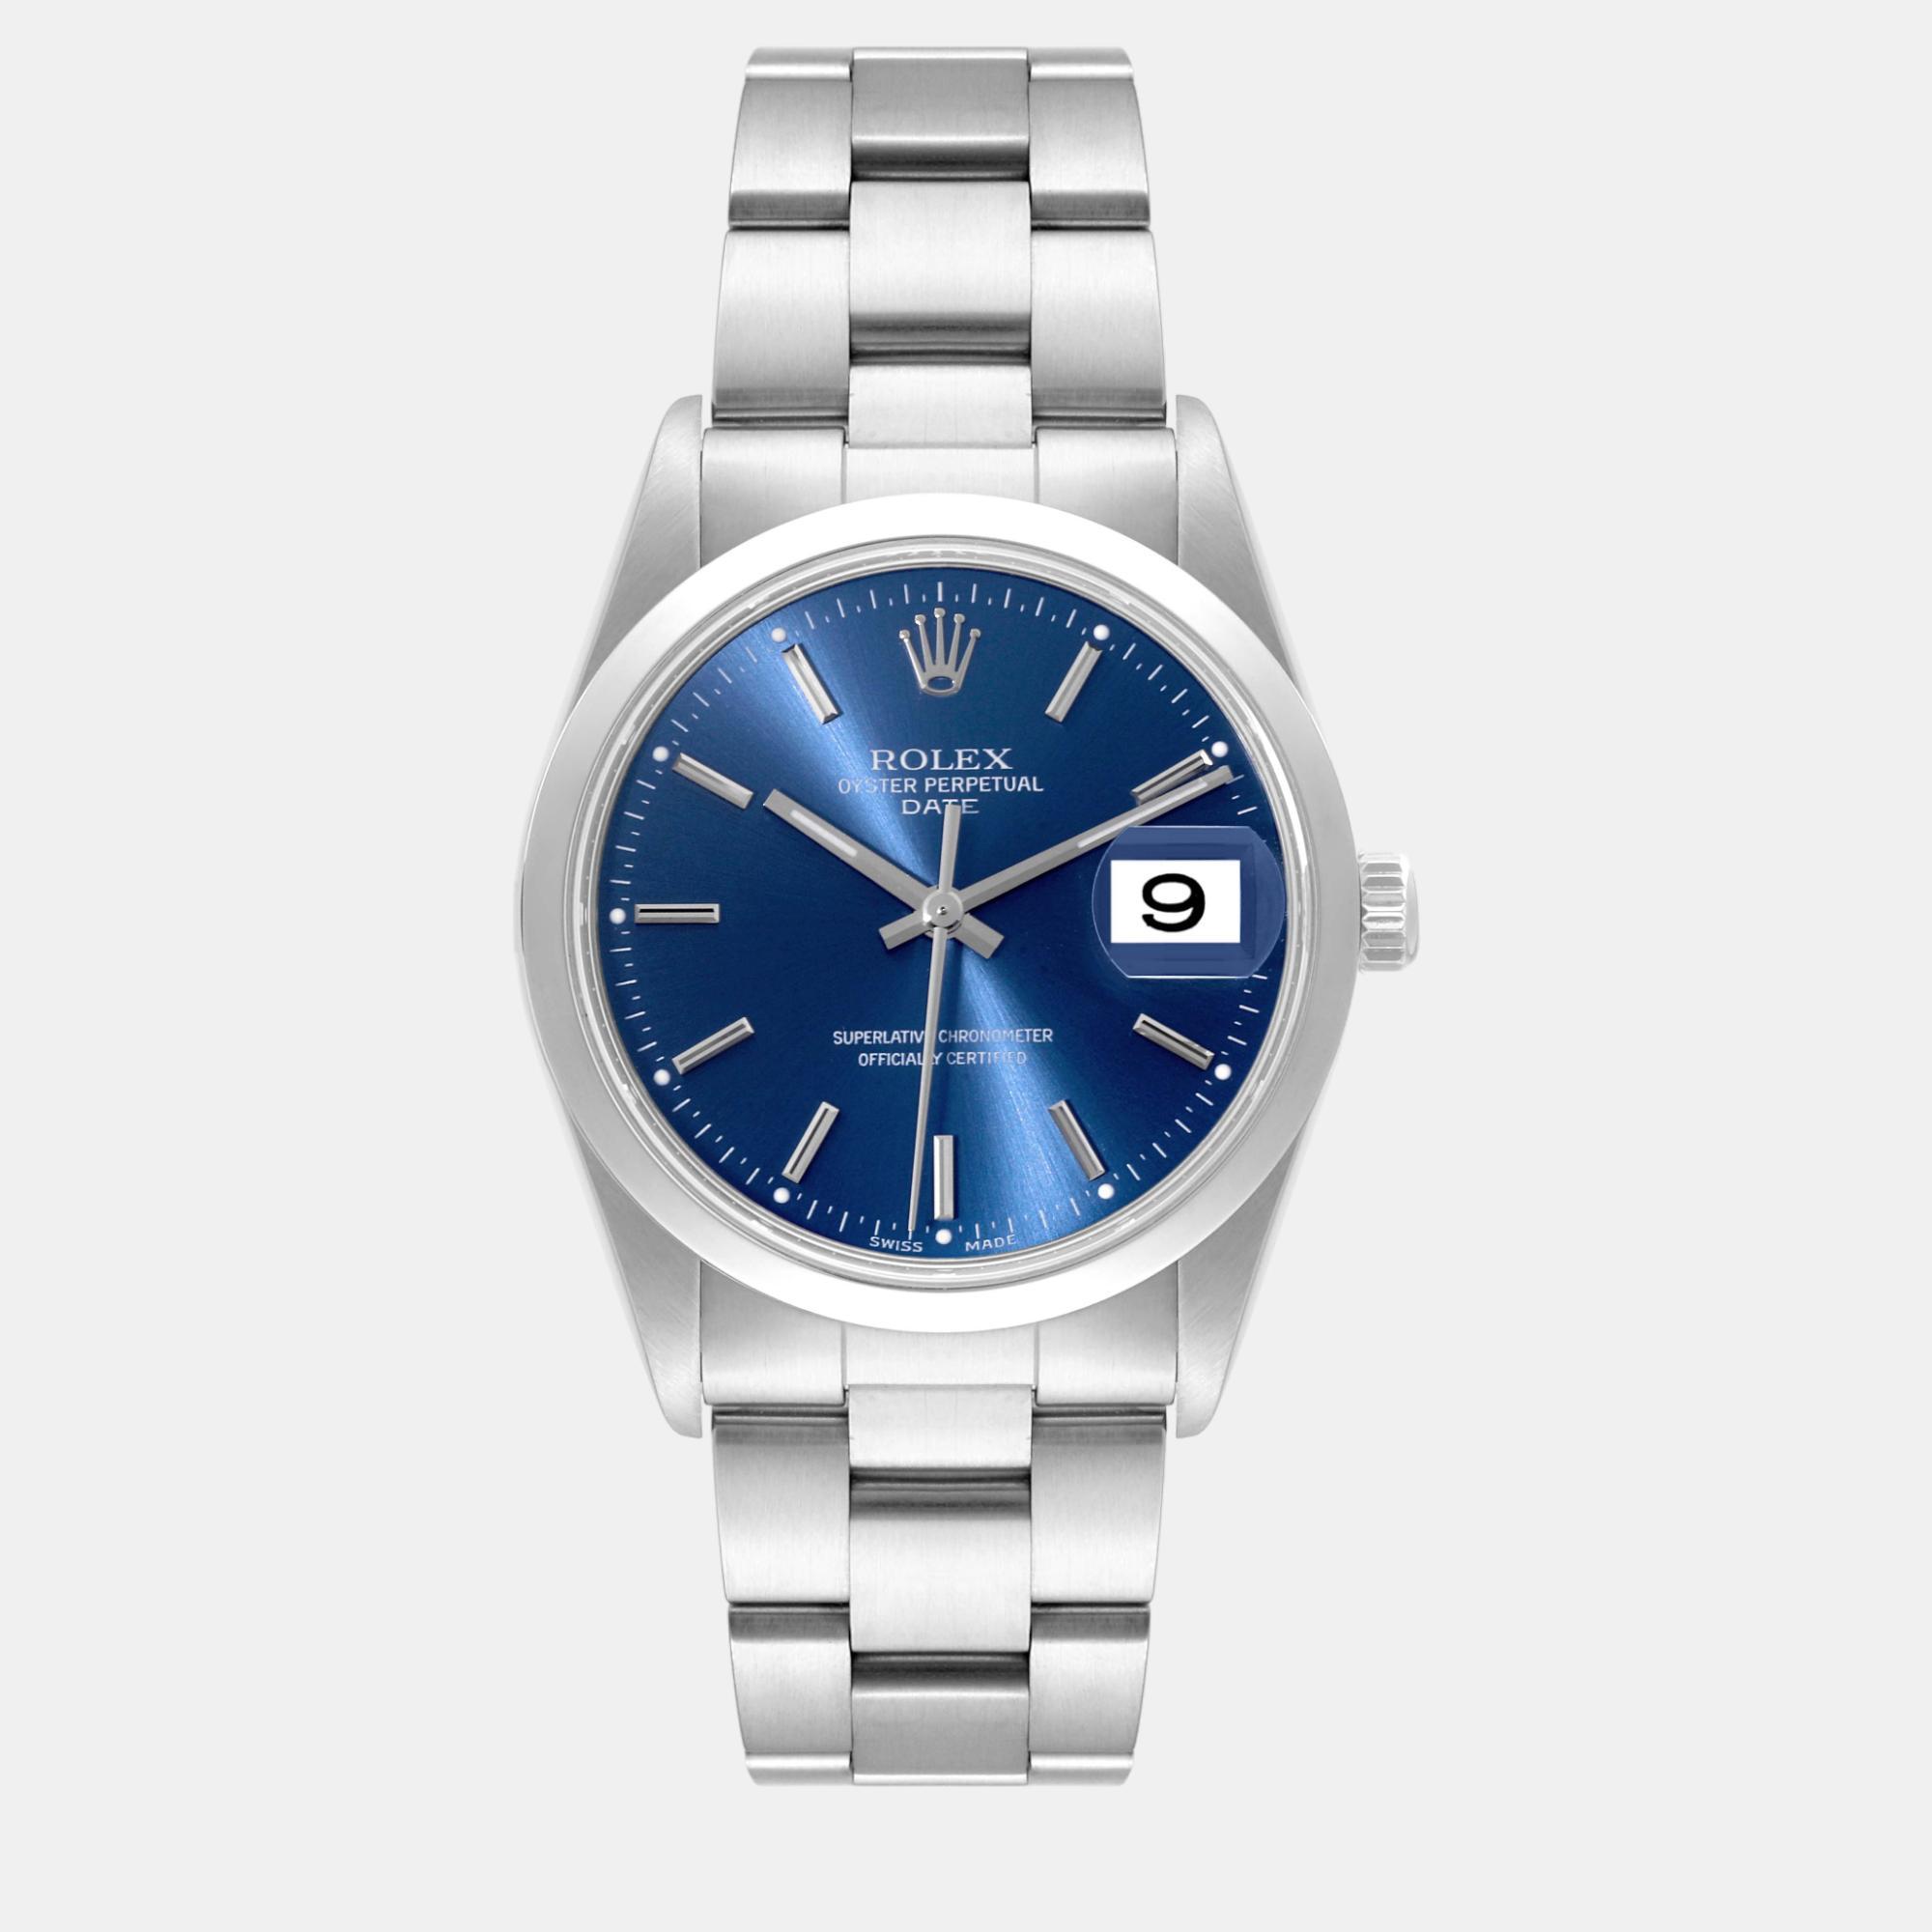 Rolex date blue dial smooth bezel steel men's watch 34.0 mm